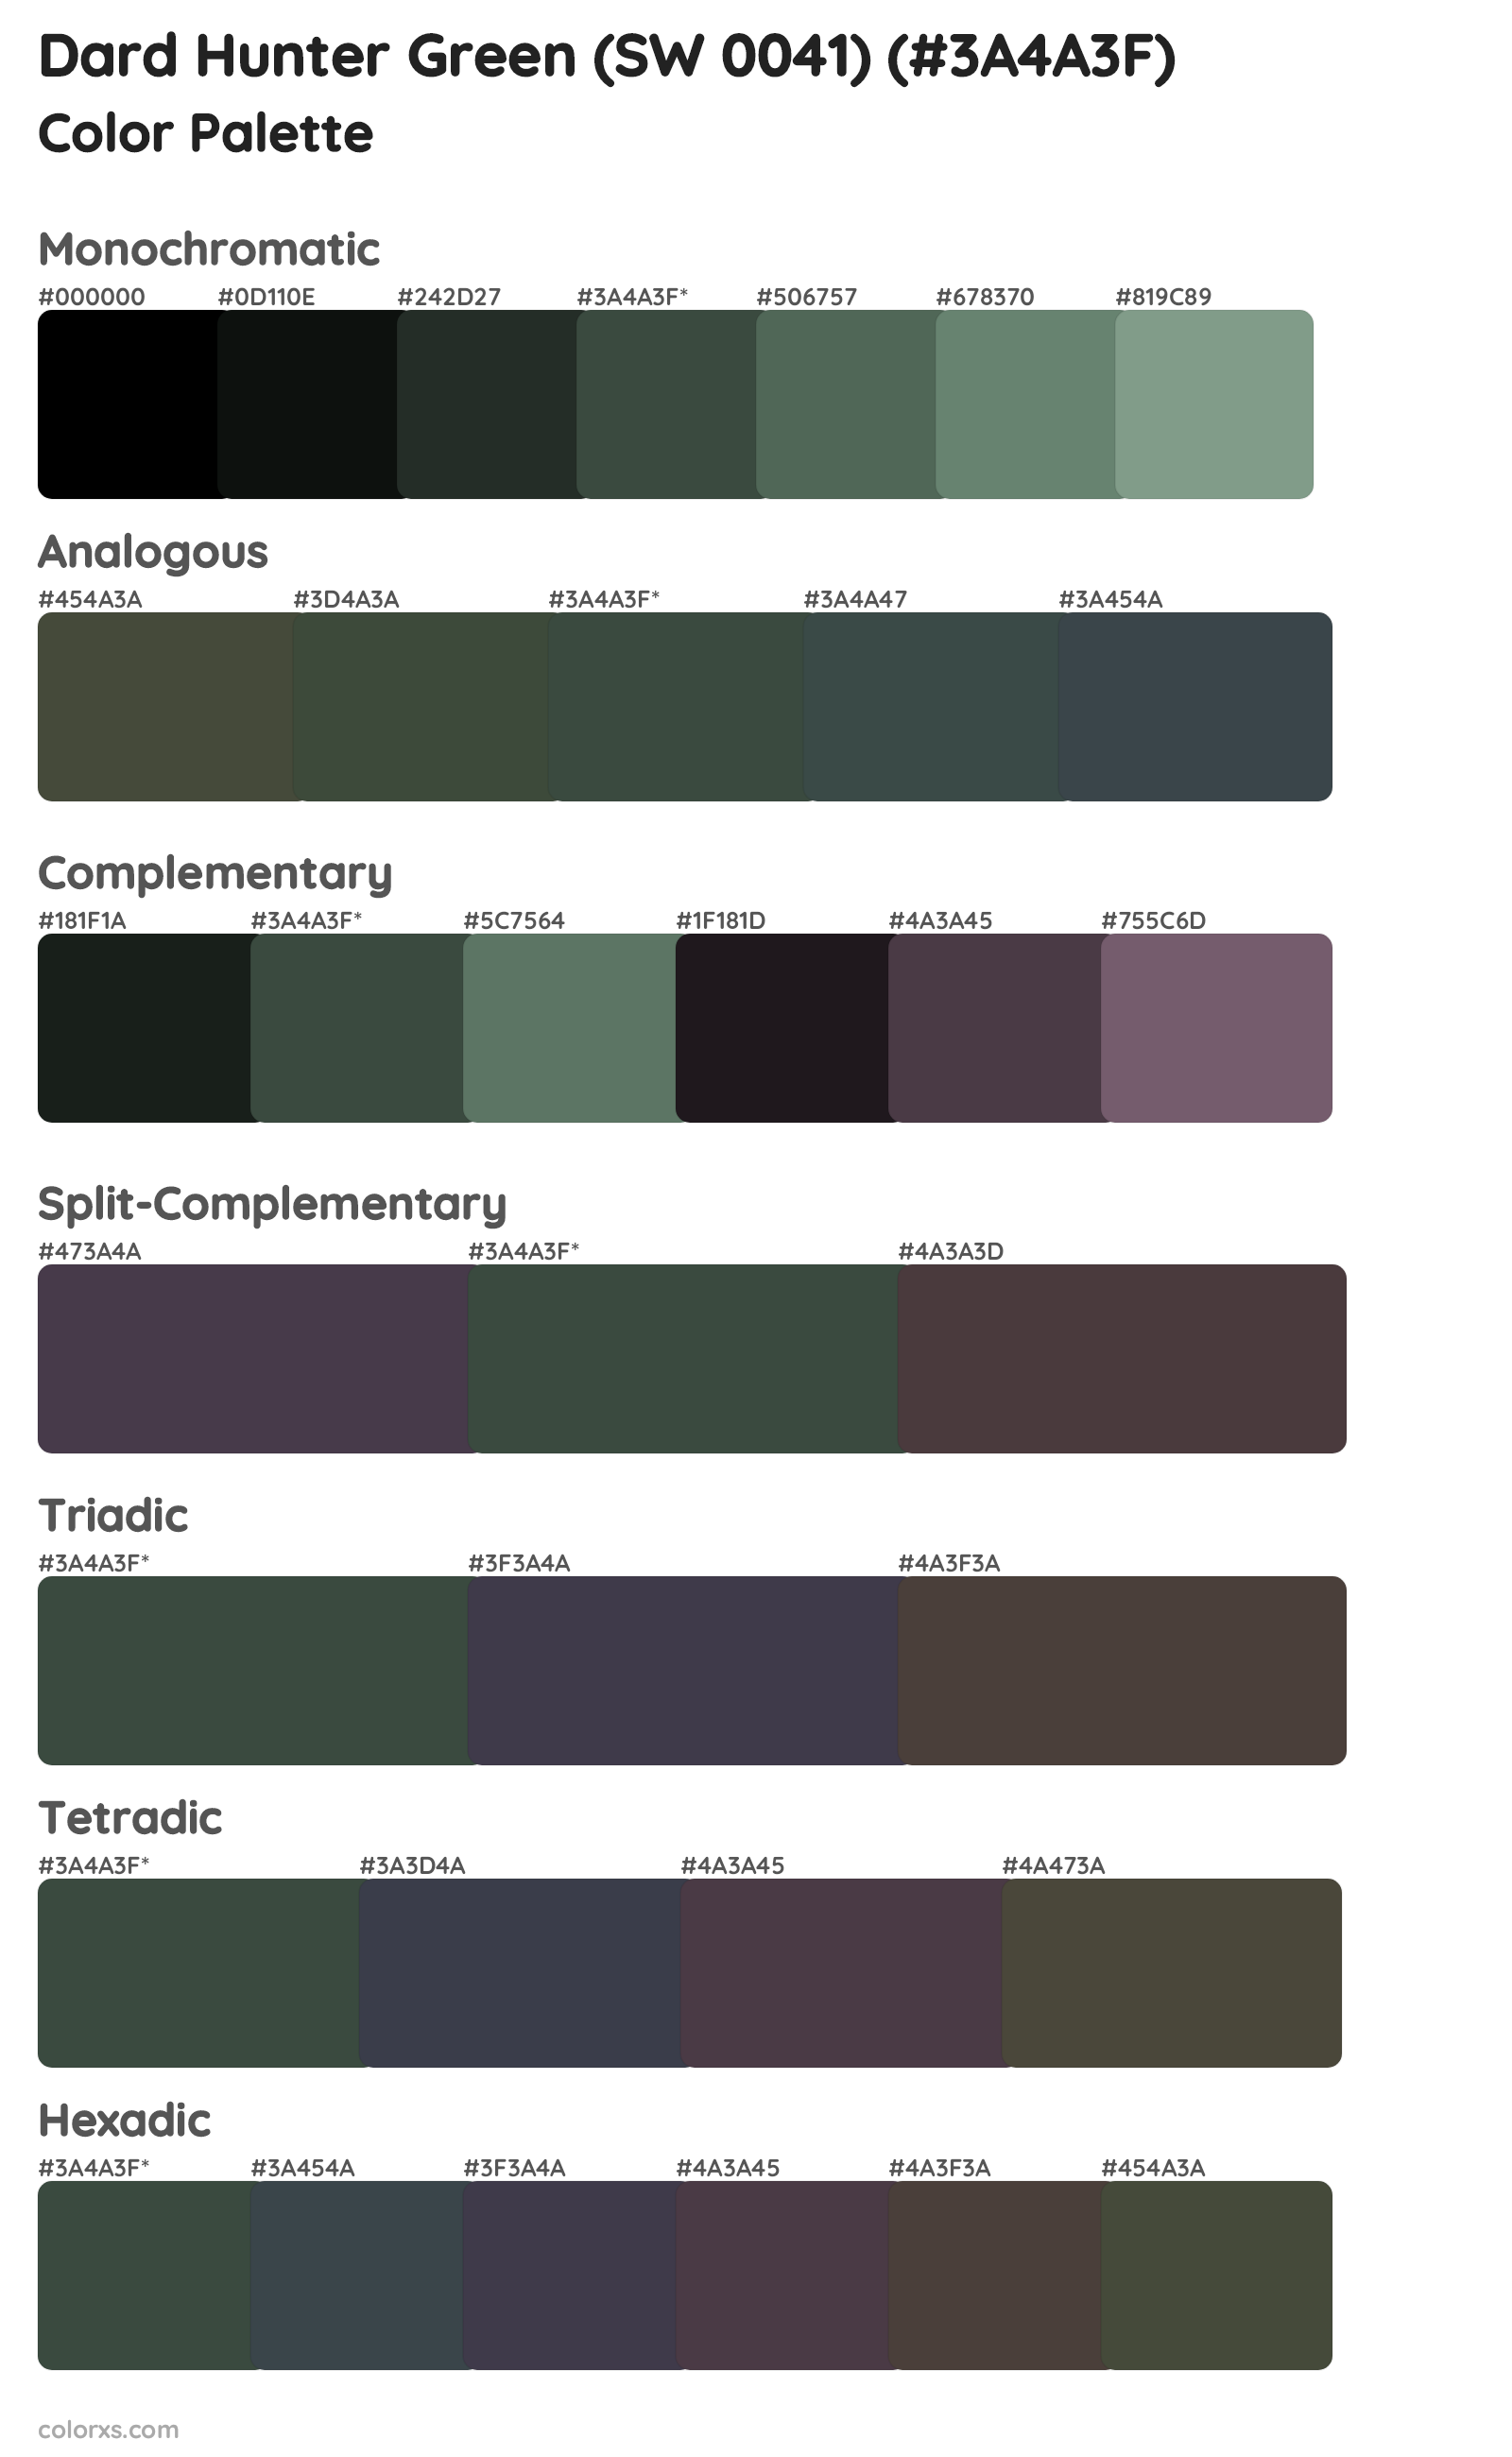 Dard Hunter Green (SW 0041) Color Scheme Palettes